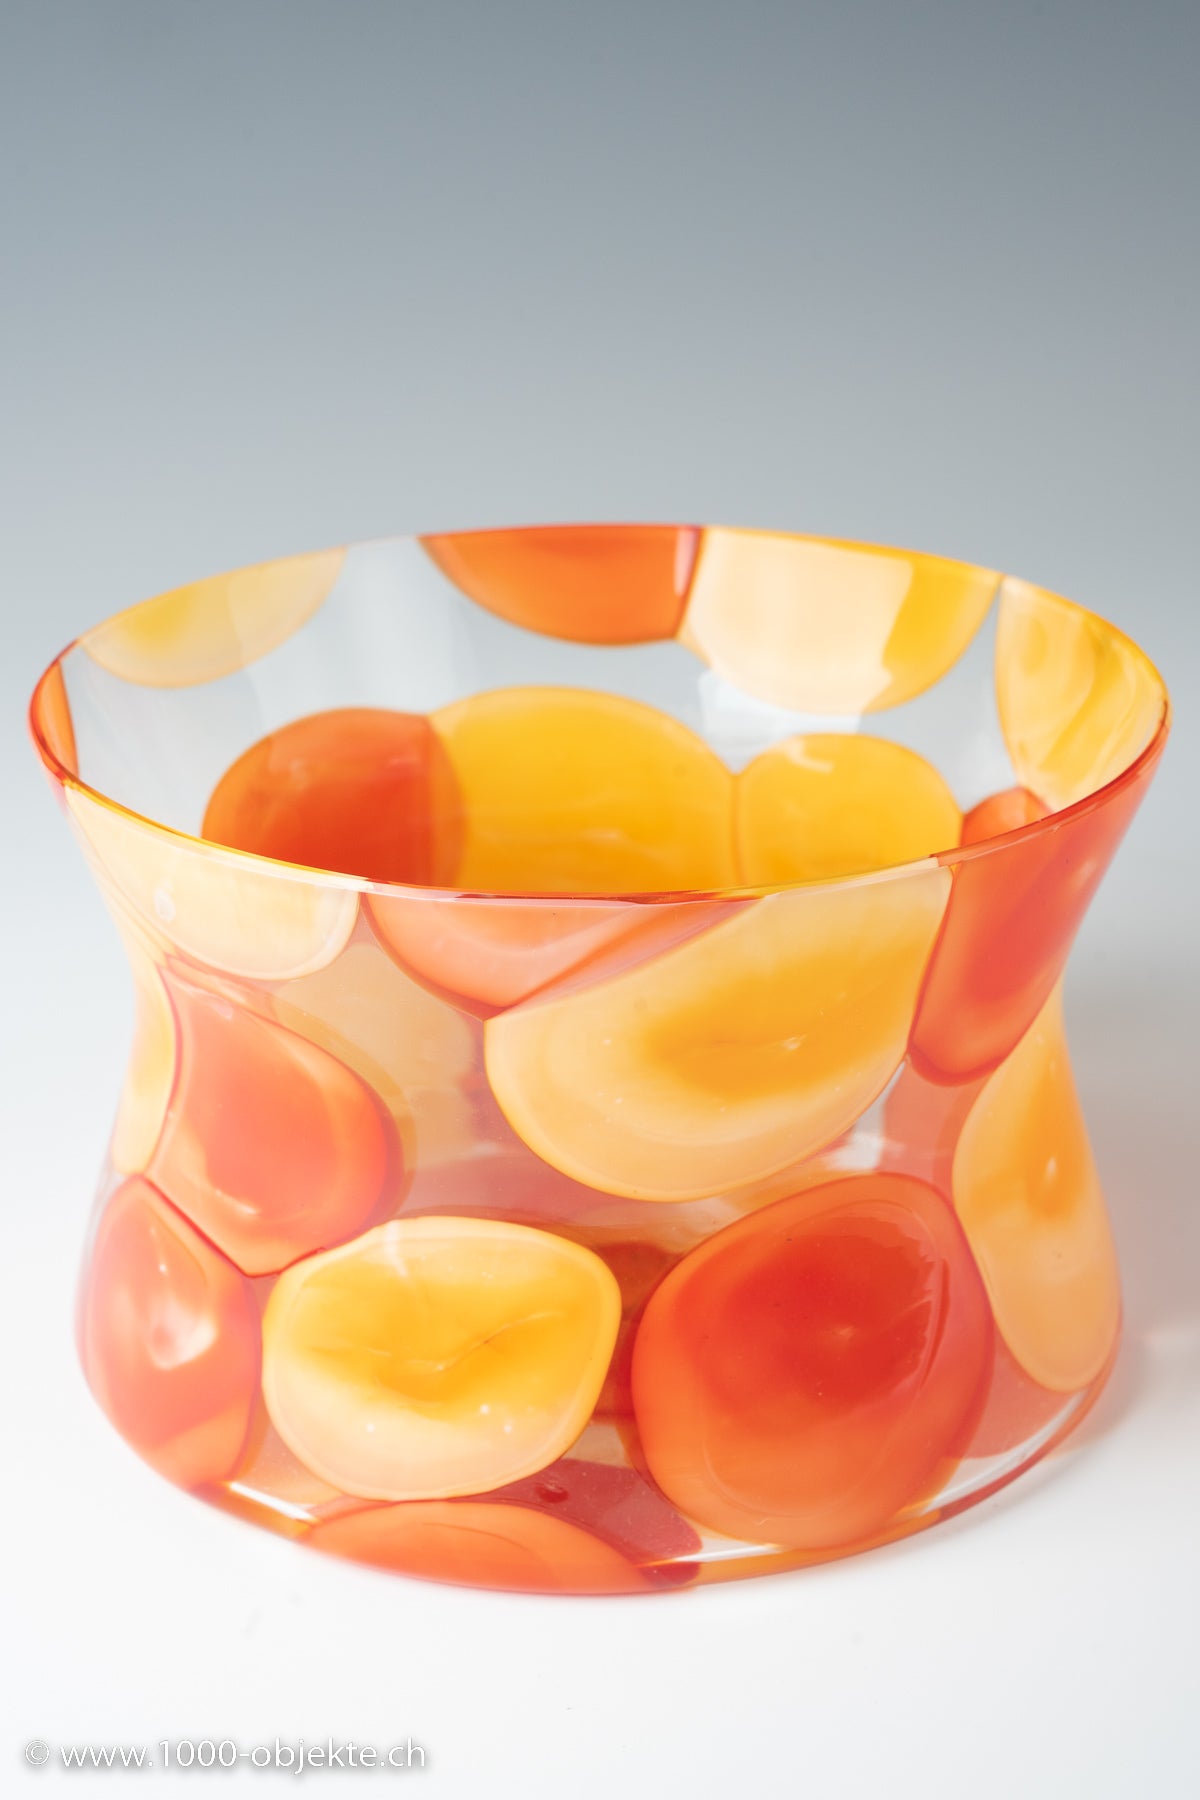 Fratelli Toso Murano art glass corset form bowl